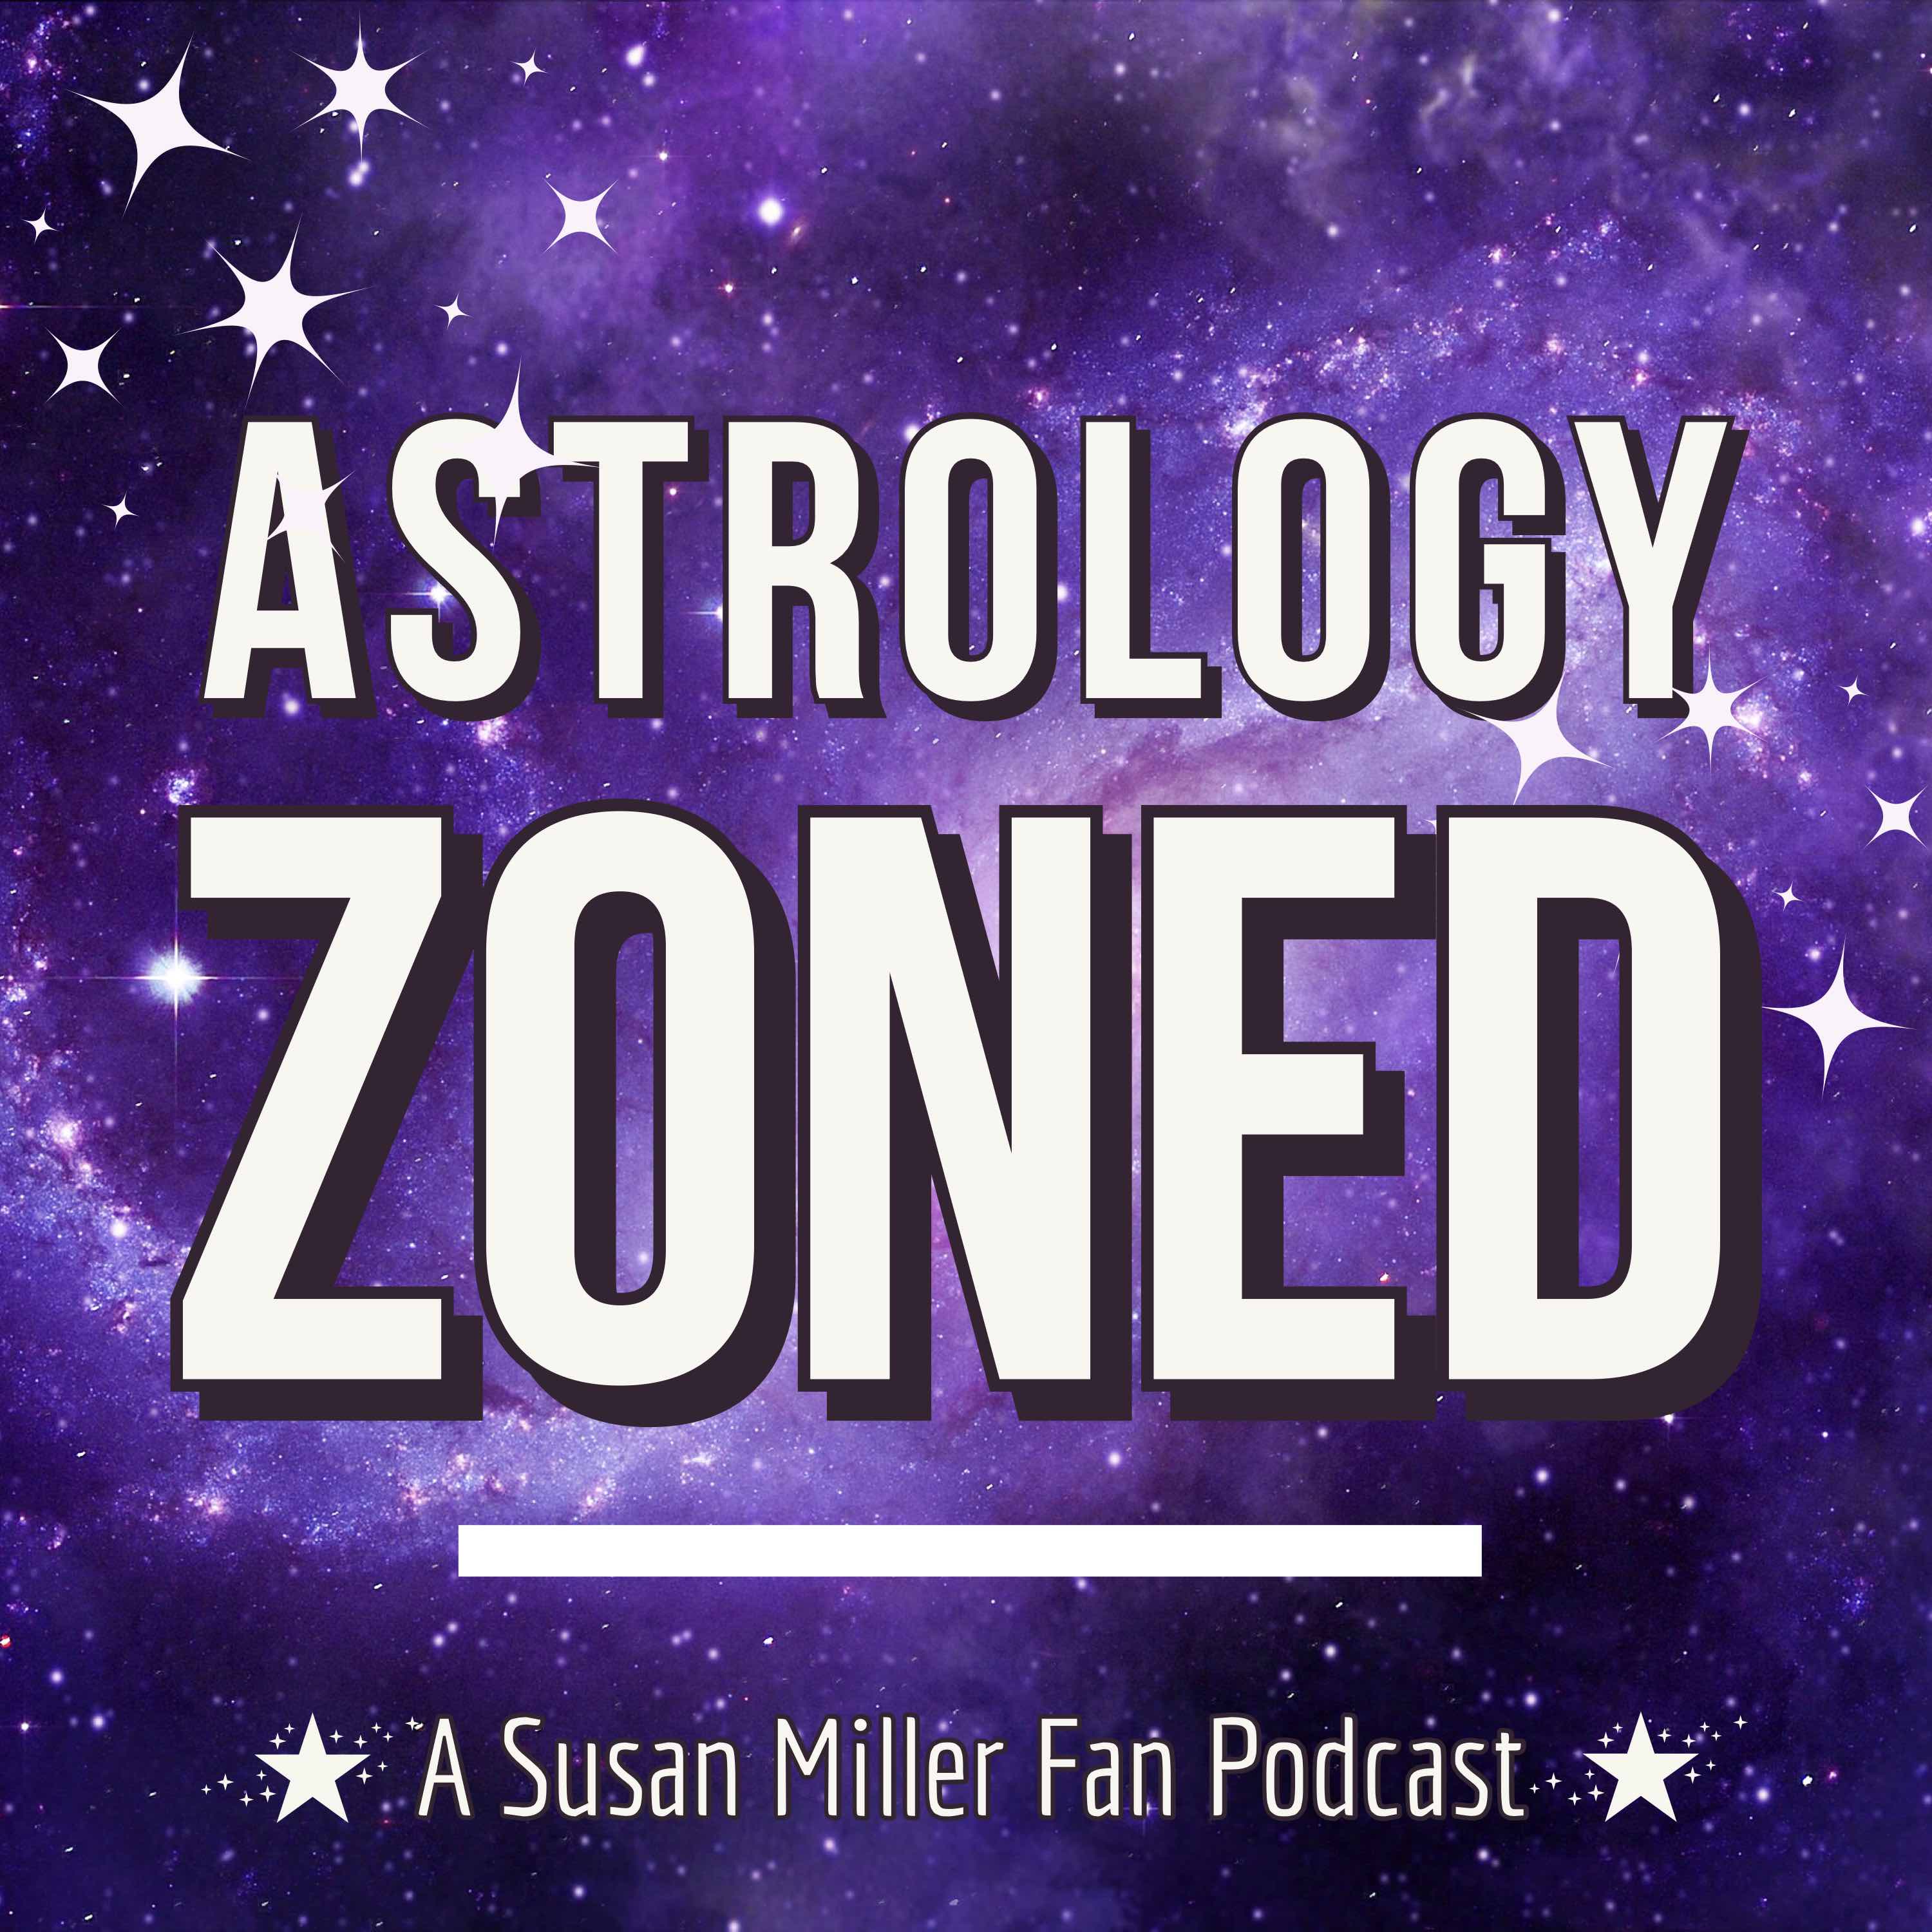 Artwork for podcast Astrology Zoned: A Susan Miller Fan Podcast